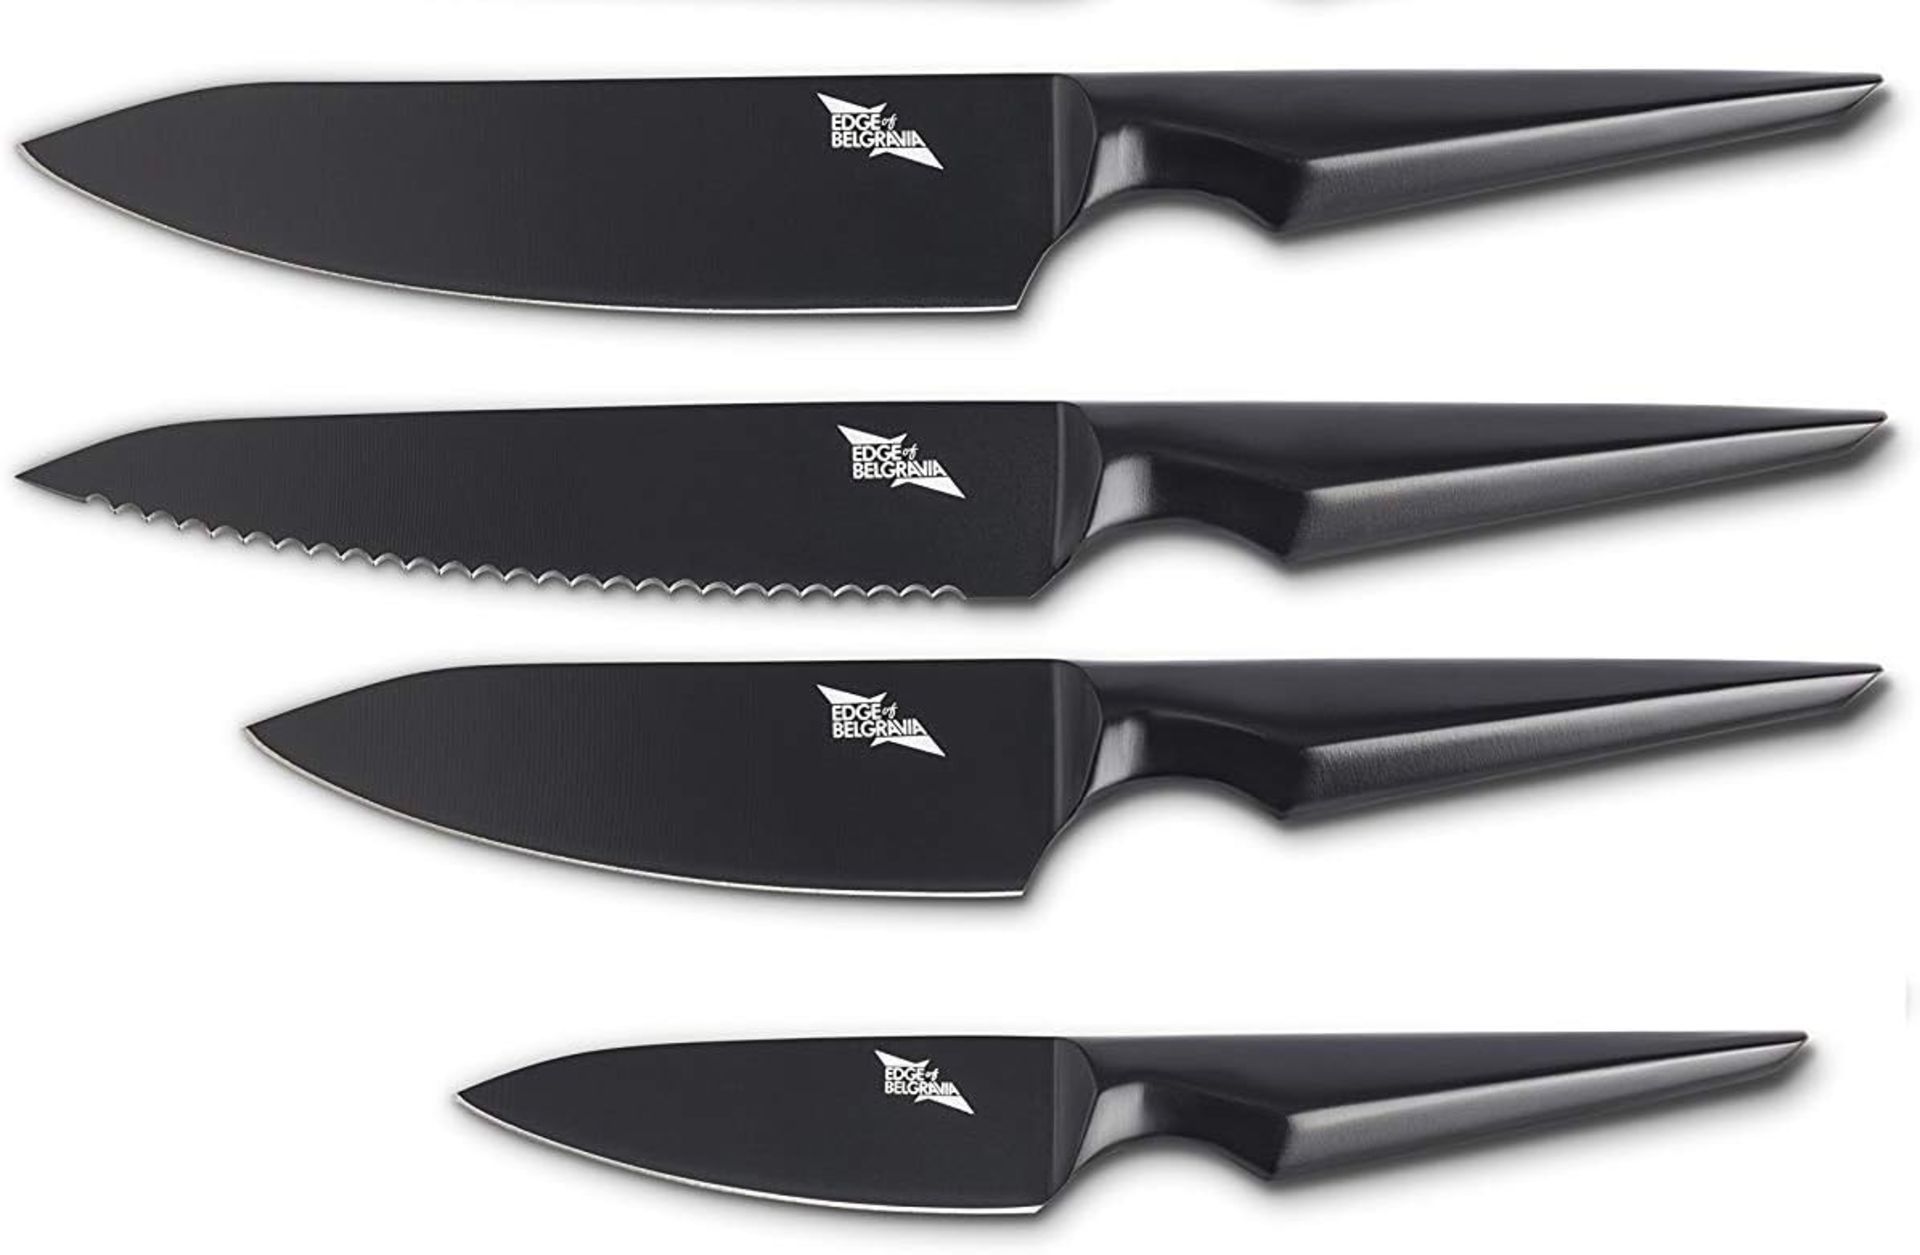 BRAND NEW EDGE OF BELGRAVIA Galatine Chef Knife Set 4pcs, Professional Chef Knife Set, Kitchen Knife